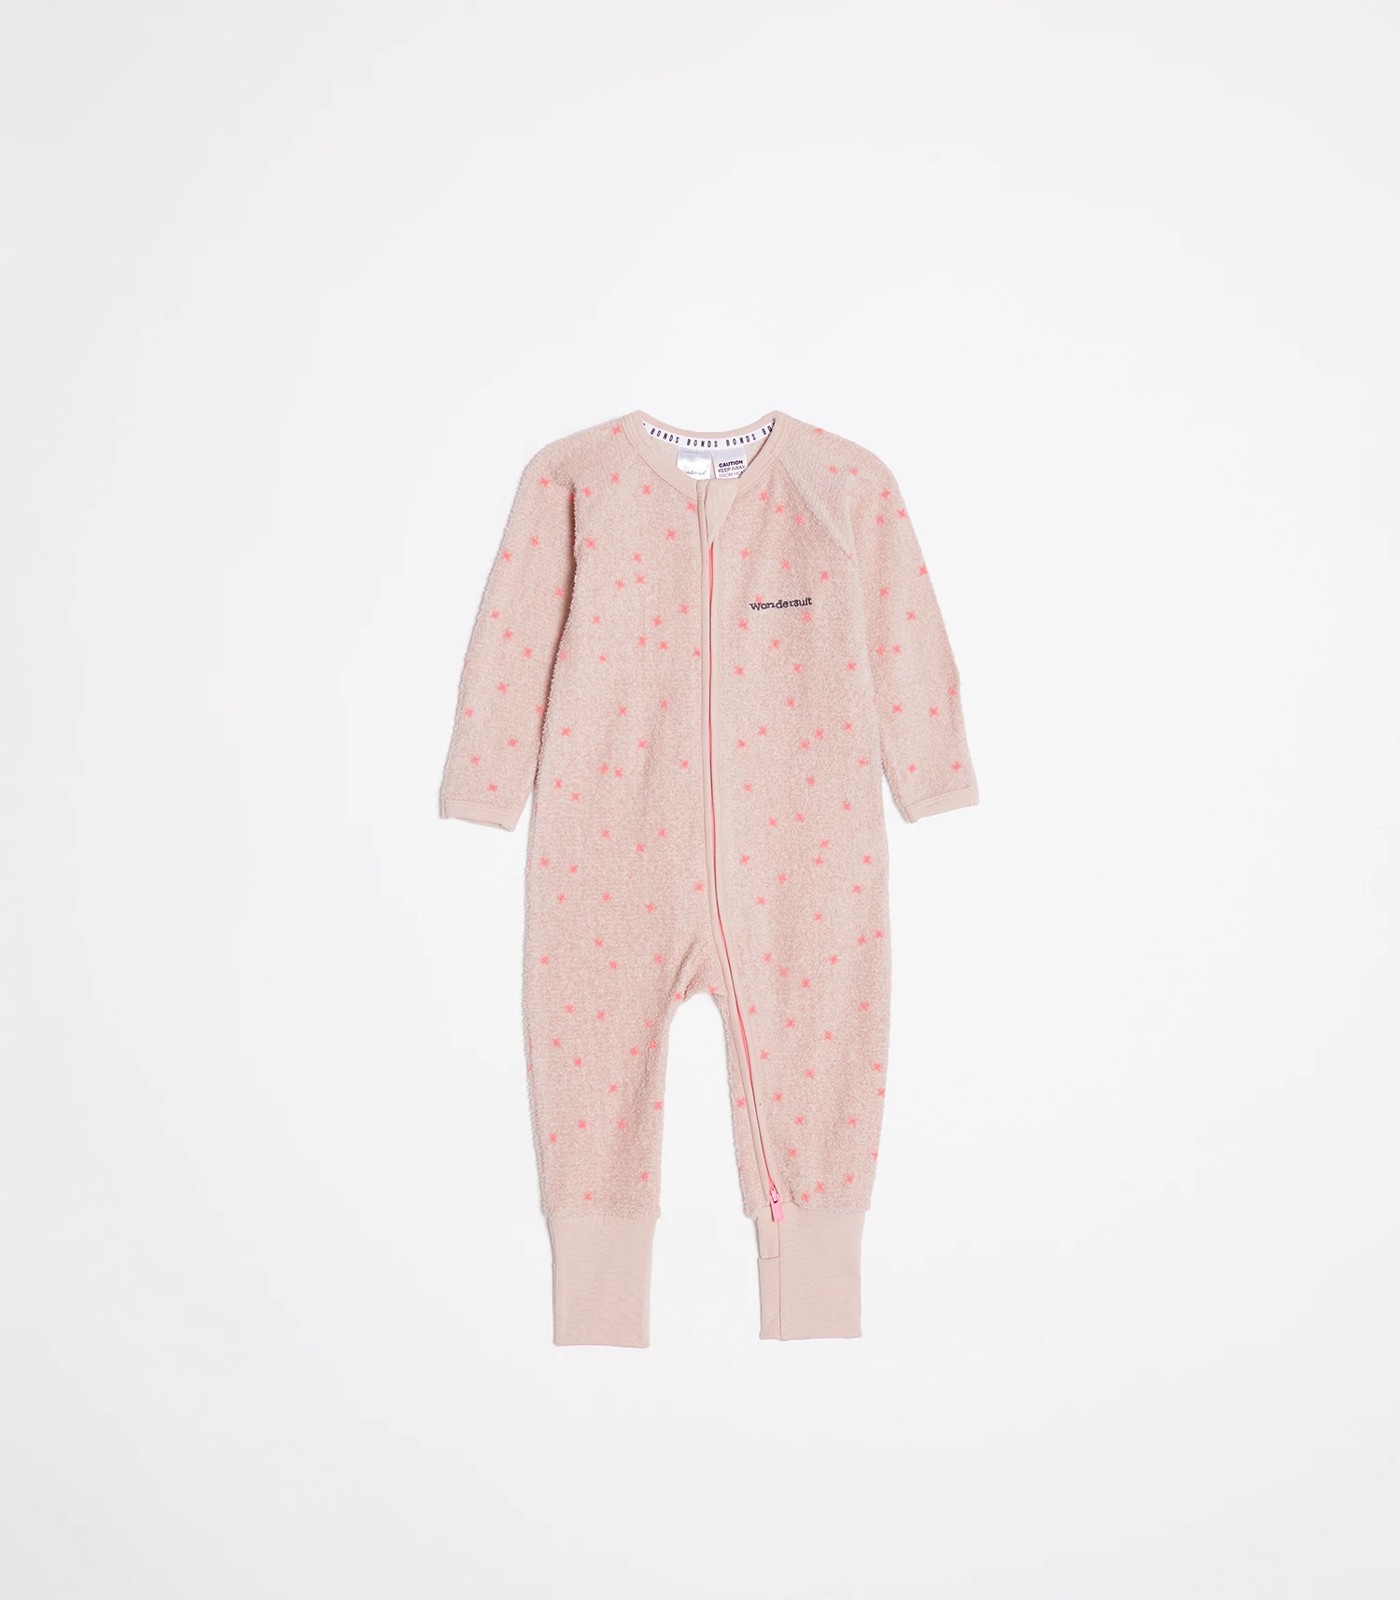 Bonds Baby Poodlette Zip Wondersuit Coverall | Target Australia